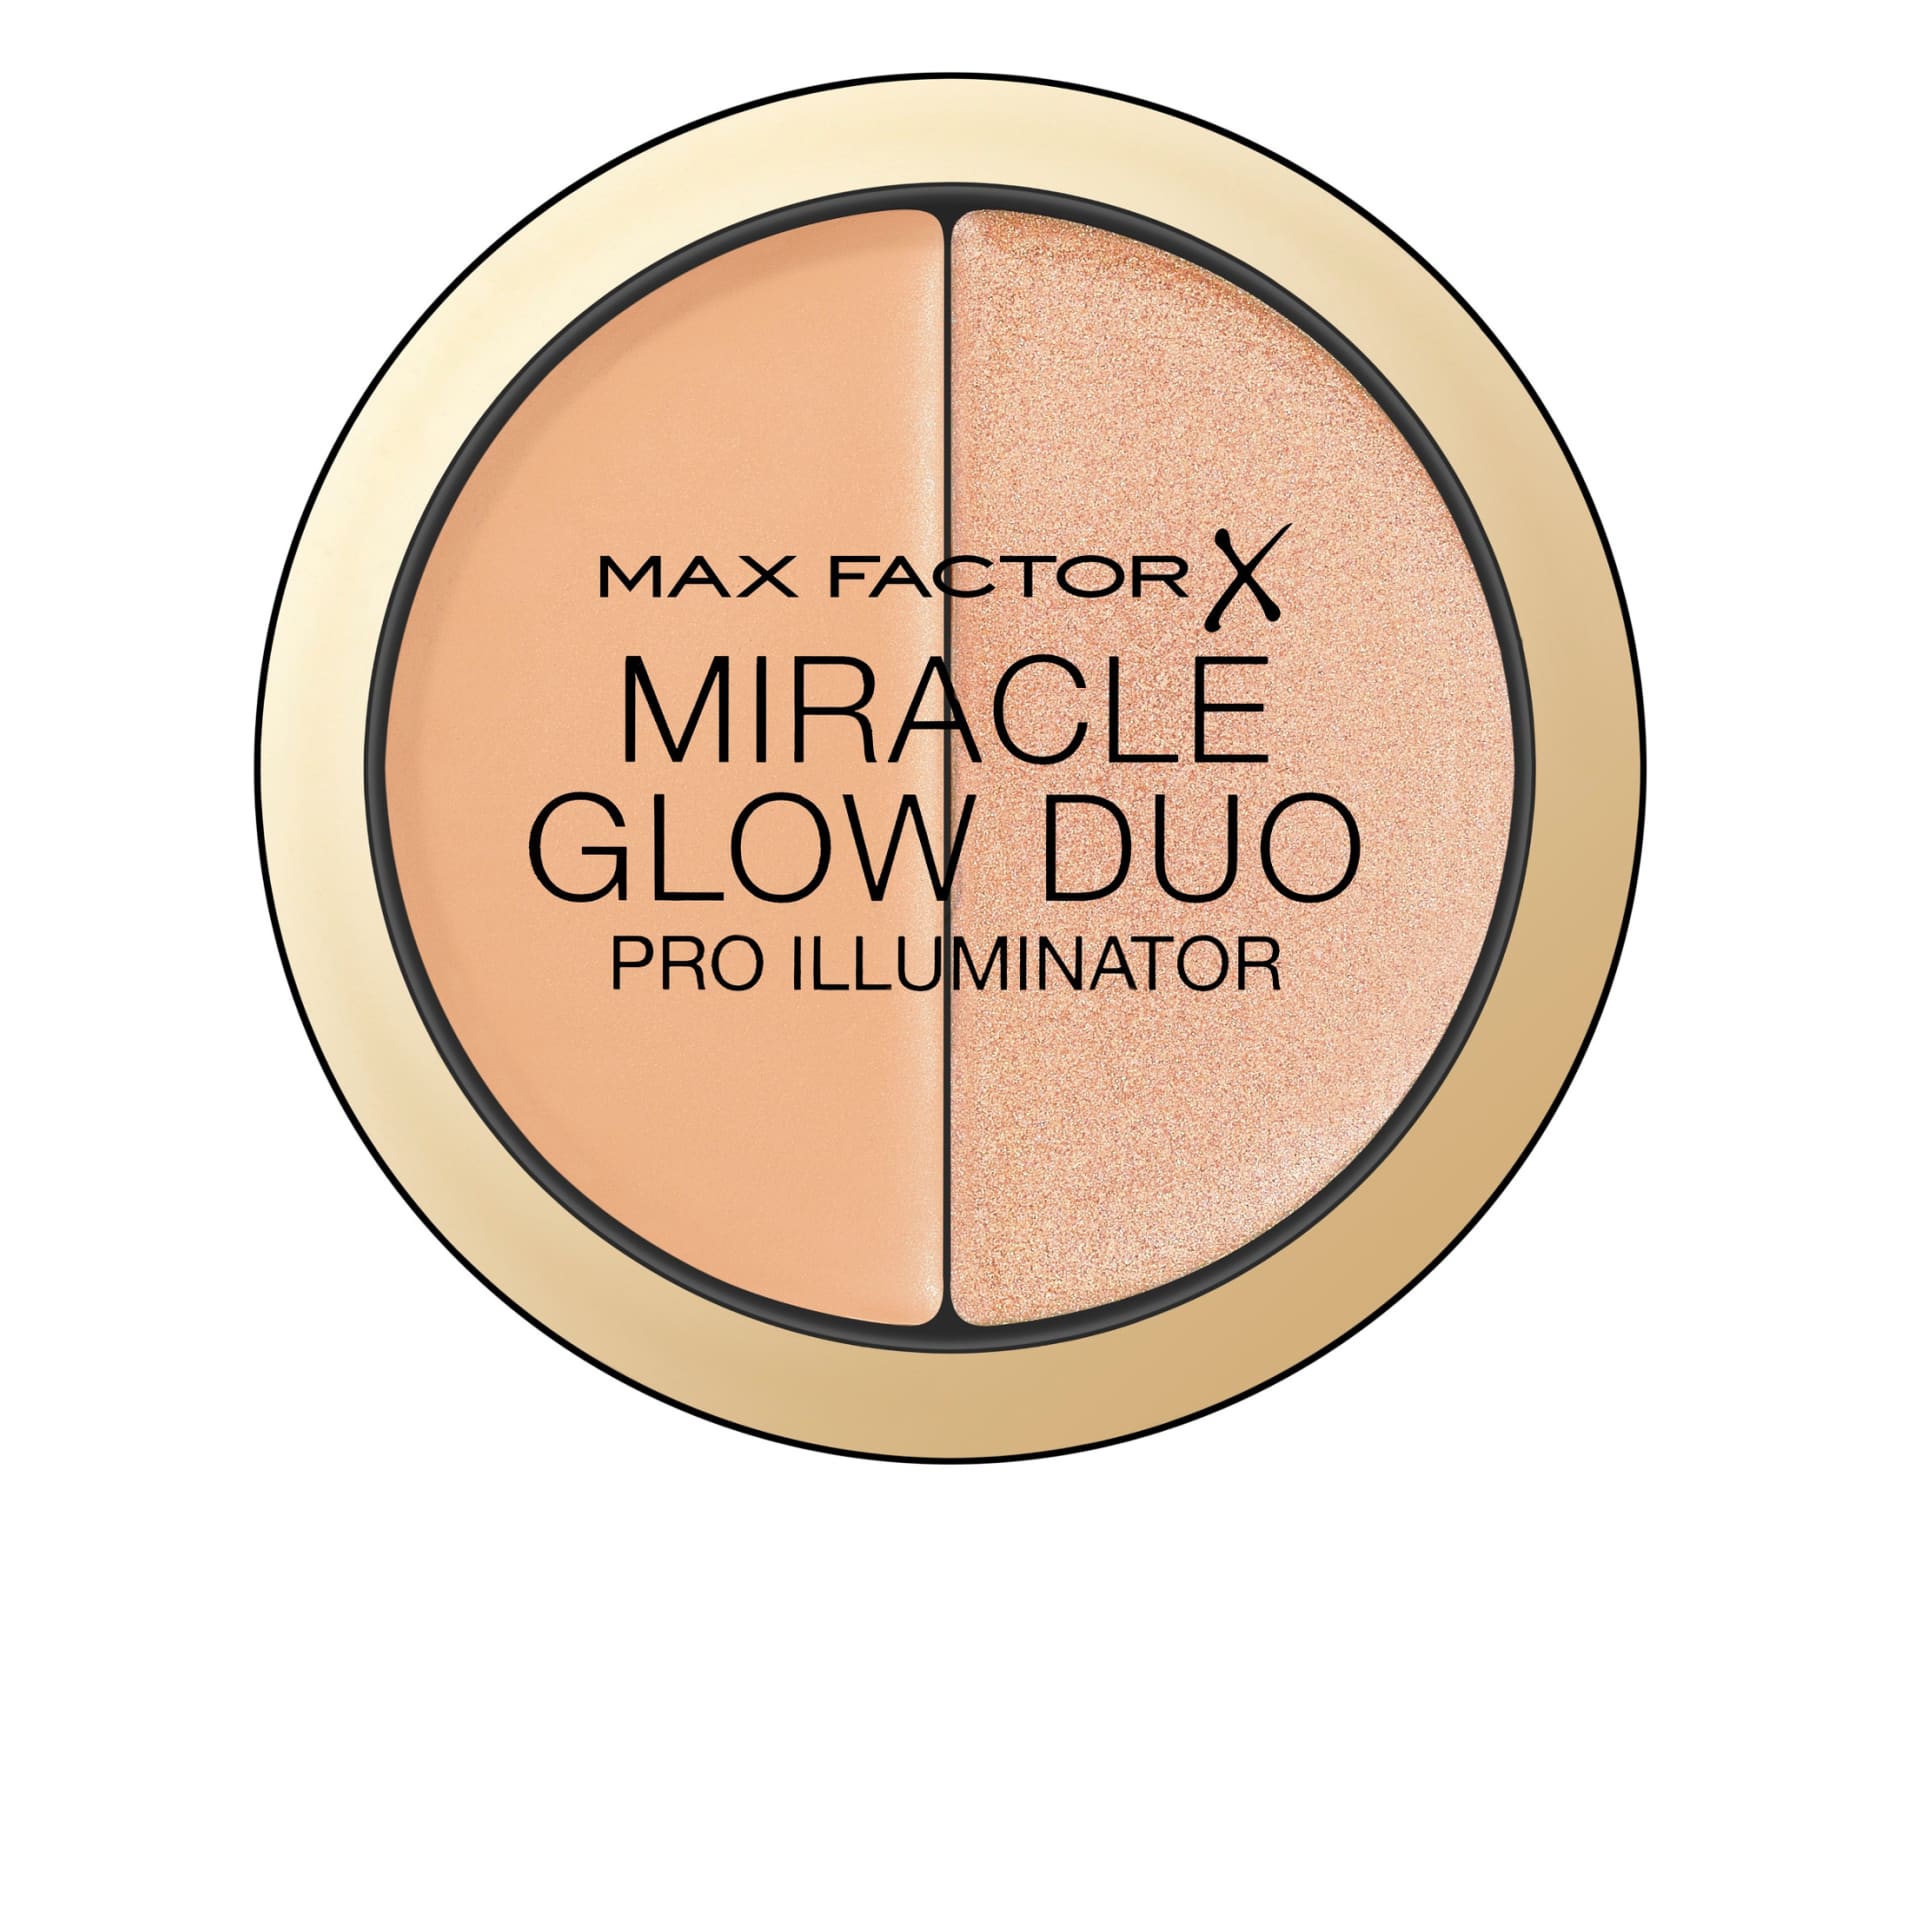 dengelemek tahsis Yasaya göre  Miracle Glow Duo | Cream Highlighter Palette | Max Factor